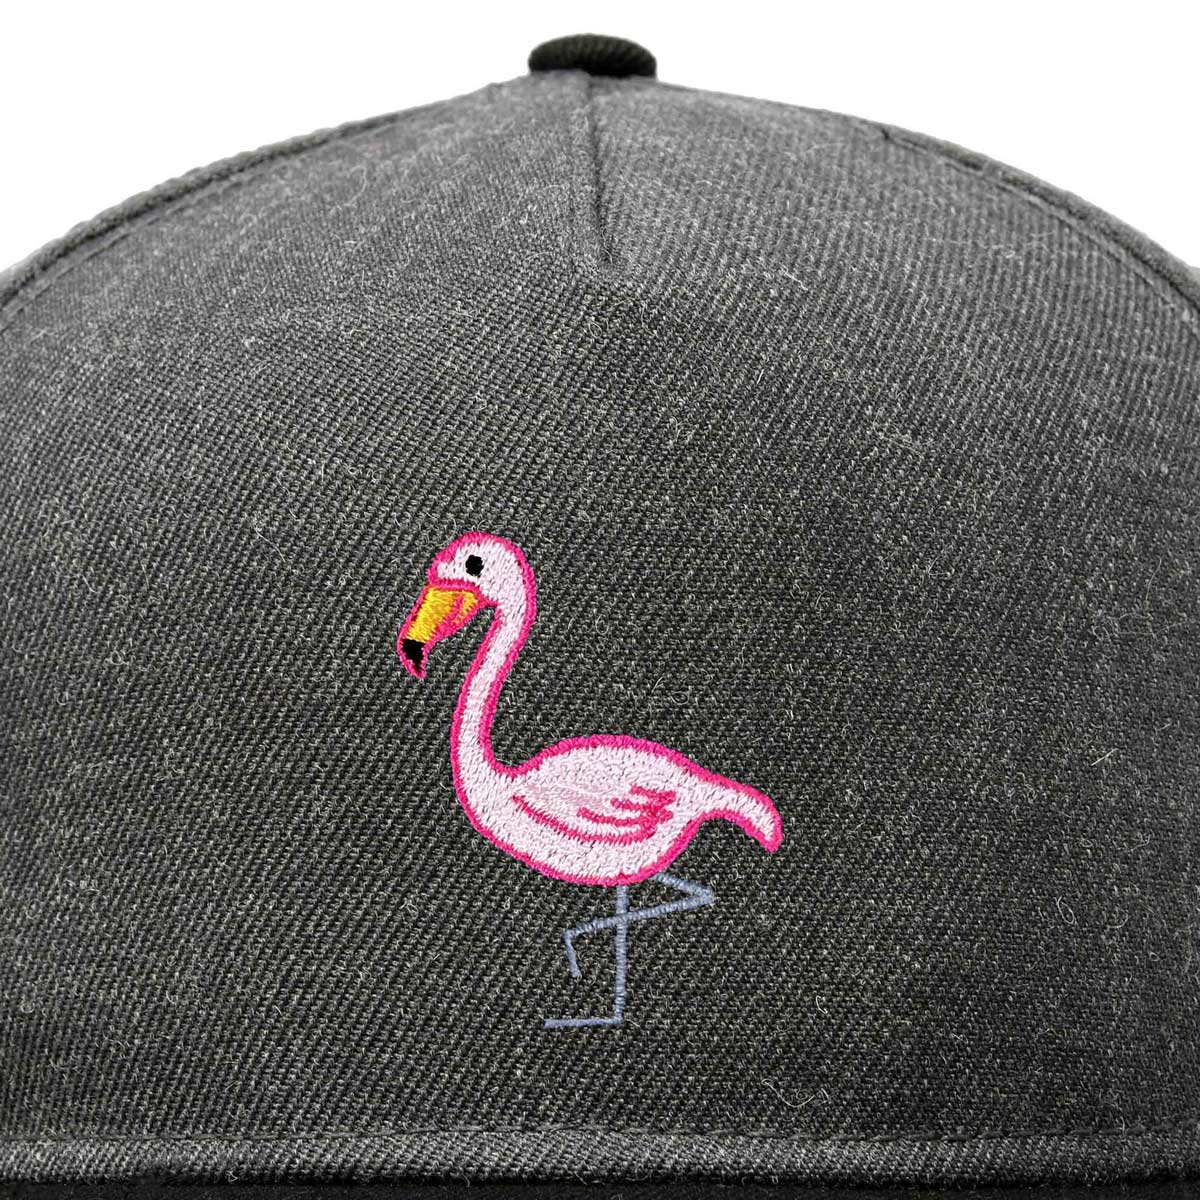 Dalix Flamingo Snapback Flat Bill Baseball Hat Embroidered Cap Mens in Black Dark Gray